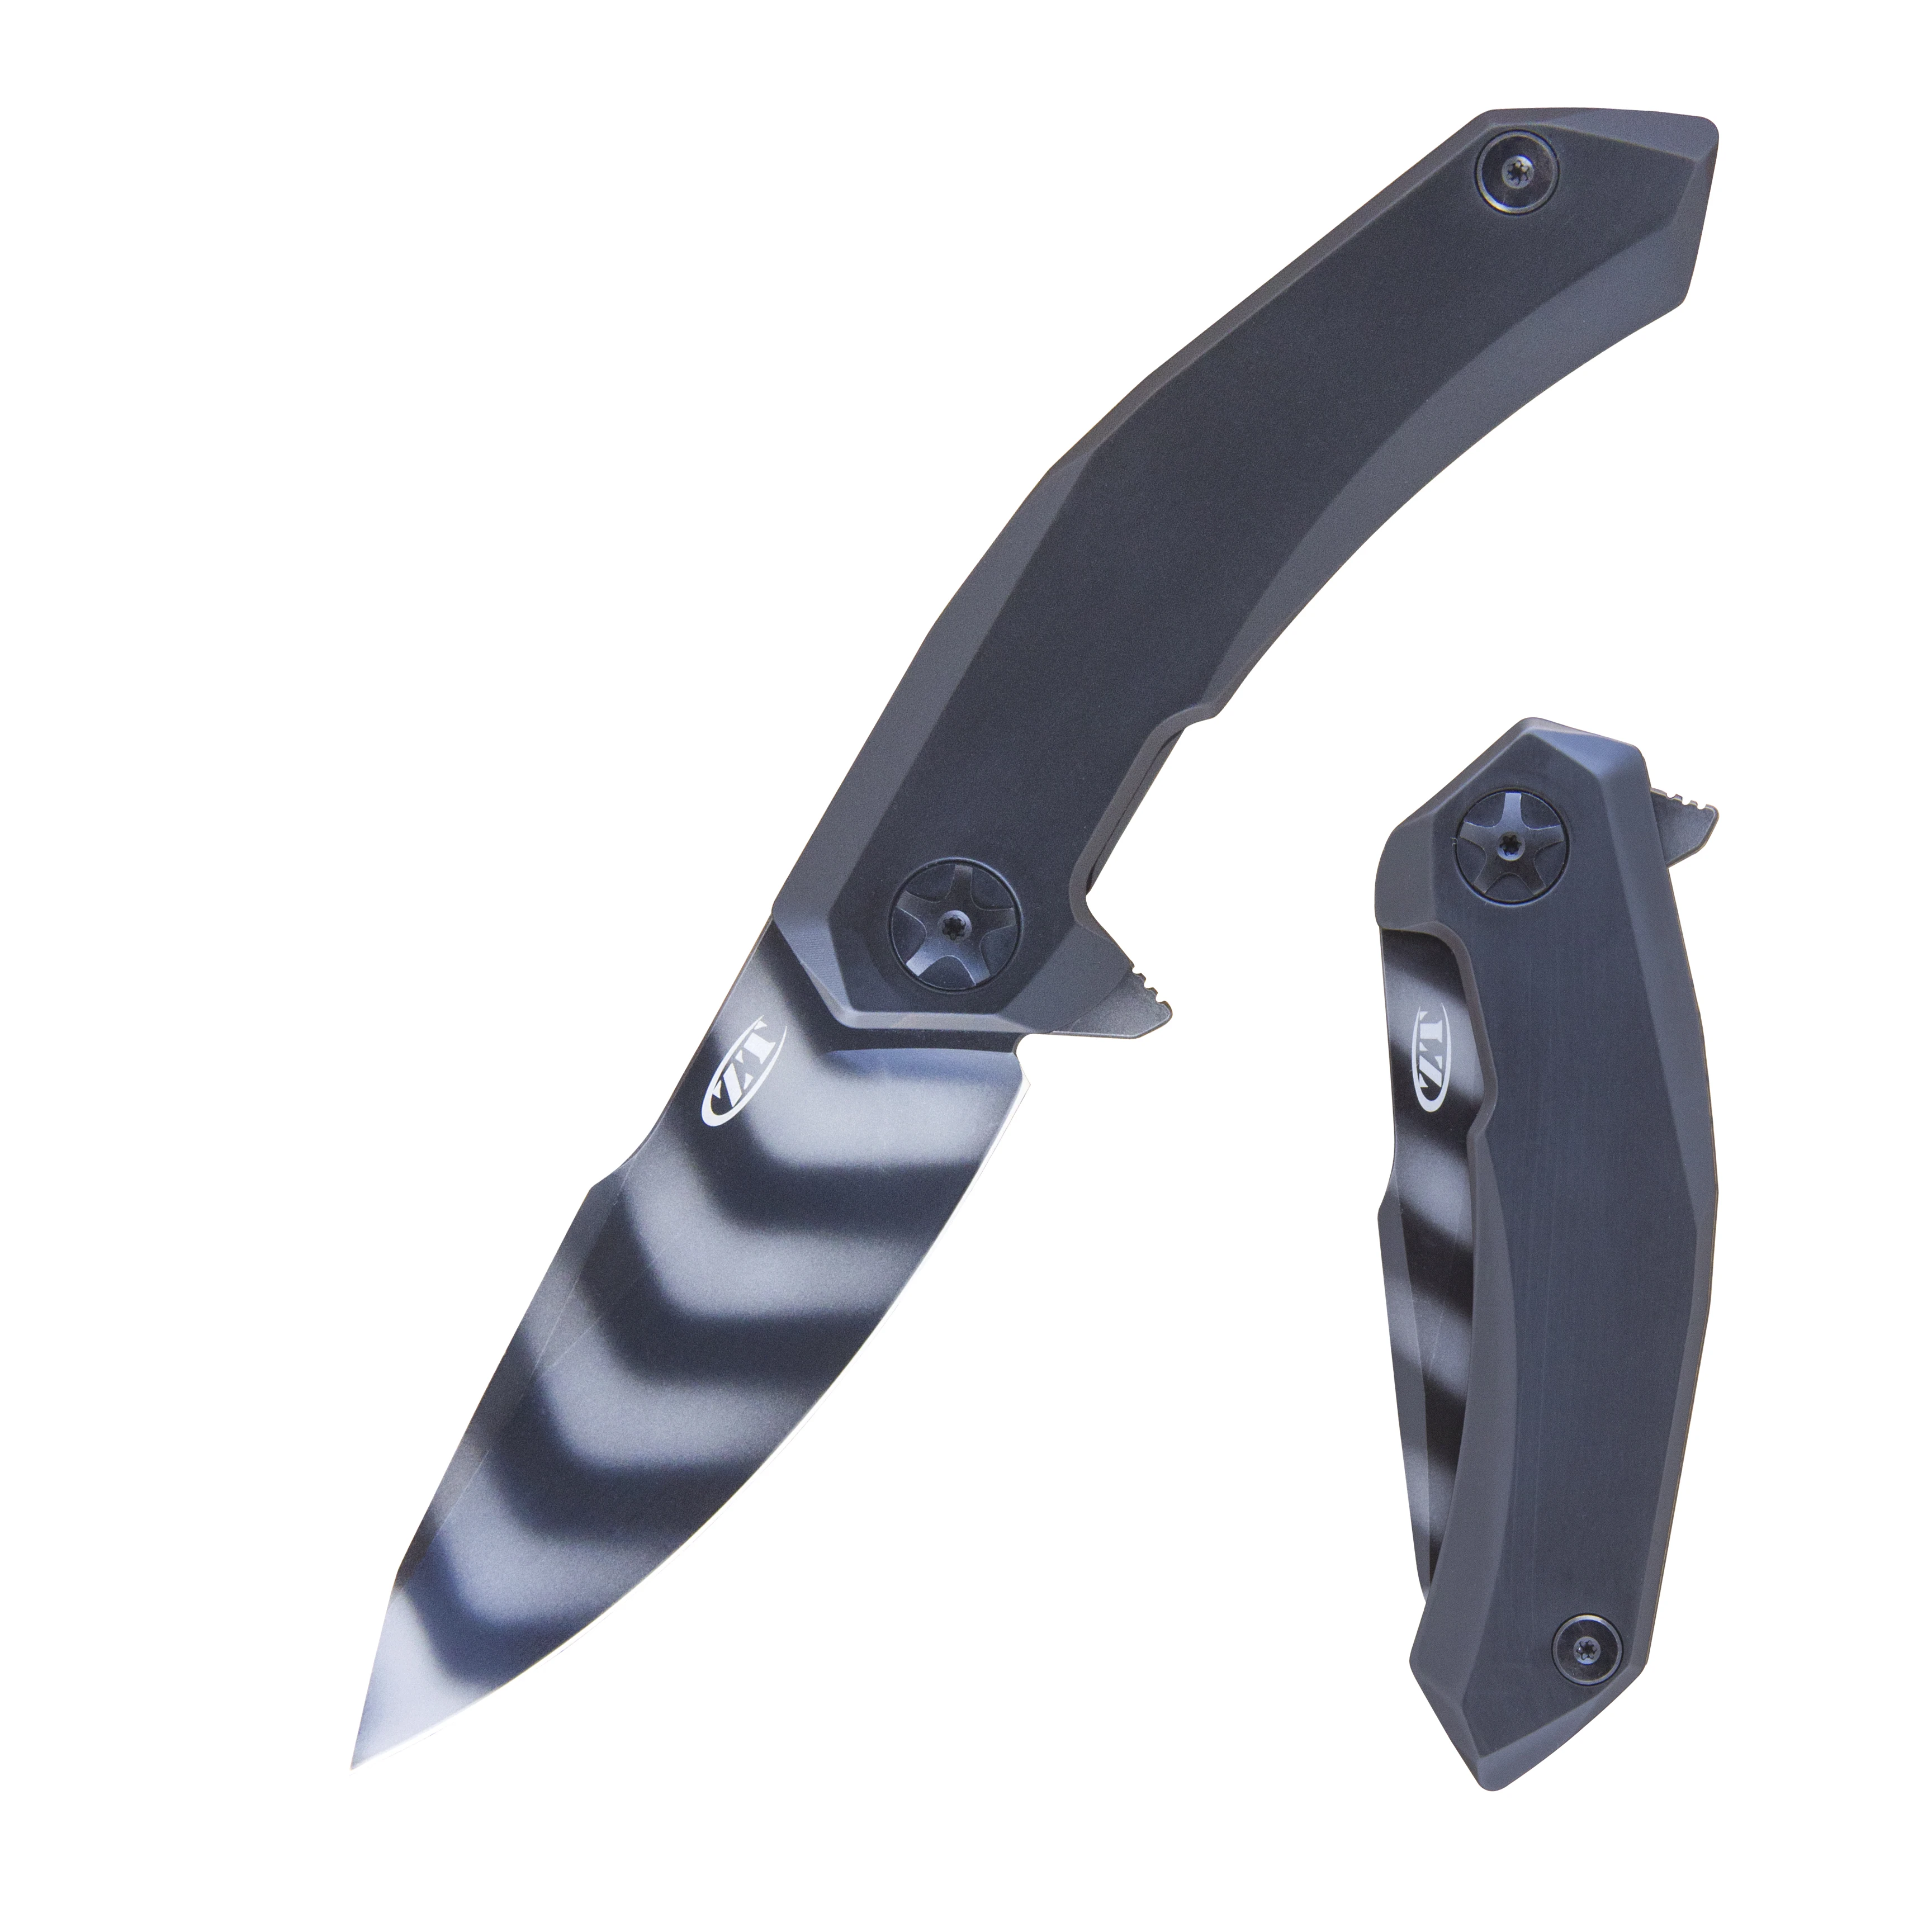 High quality ZT 0095 folding knife  titanium alloy handle  Pocket Survival EDC Tool gift knife  camp hunt outdoor equipment